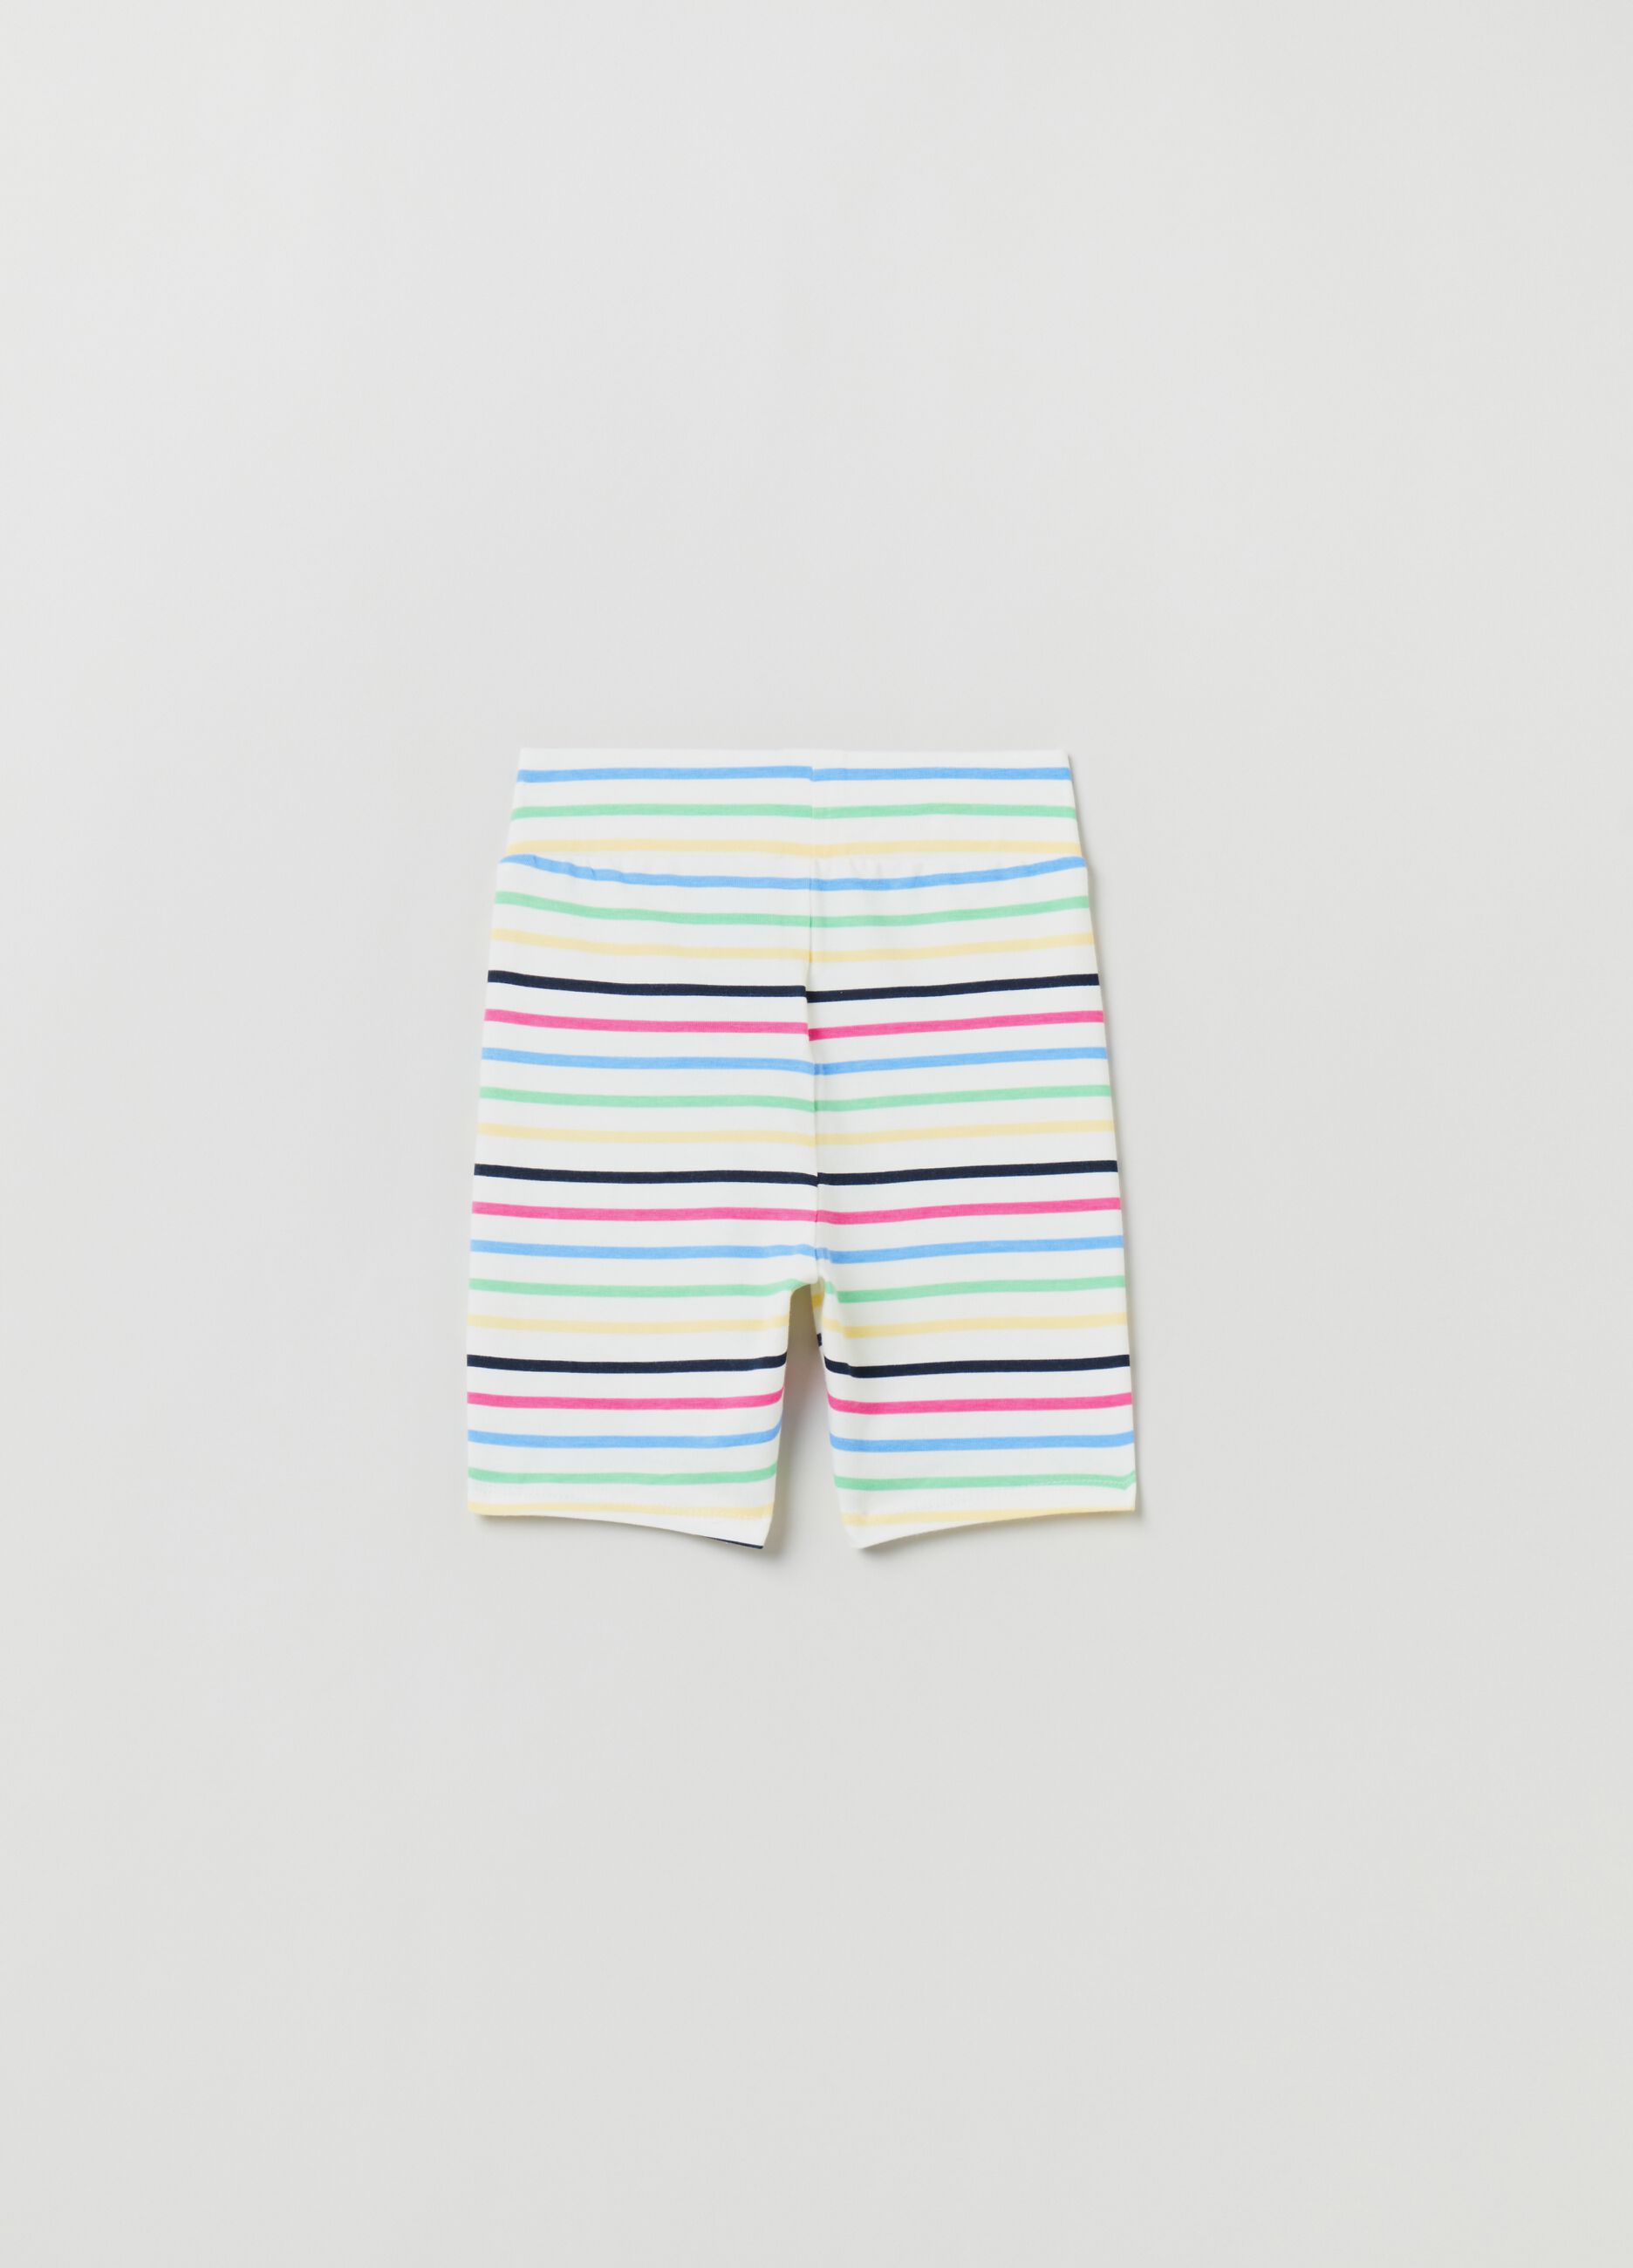 Striped patterned shorts_1